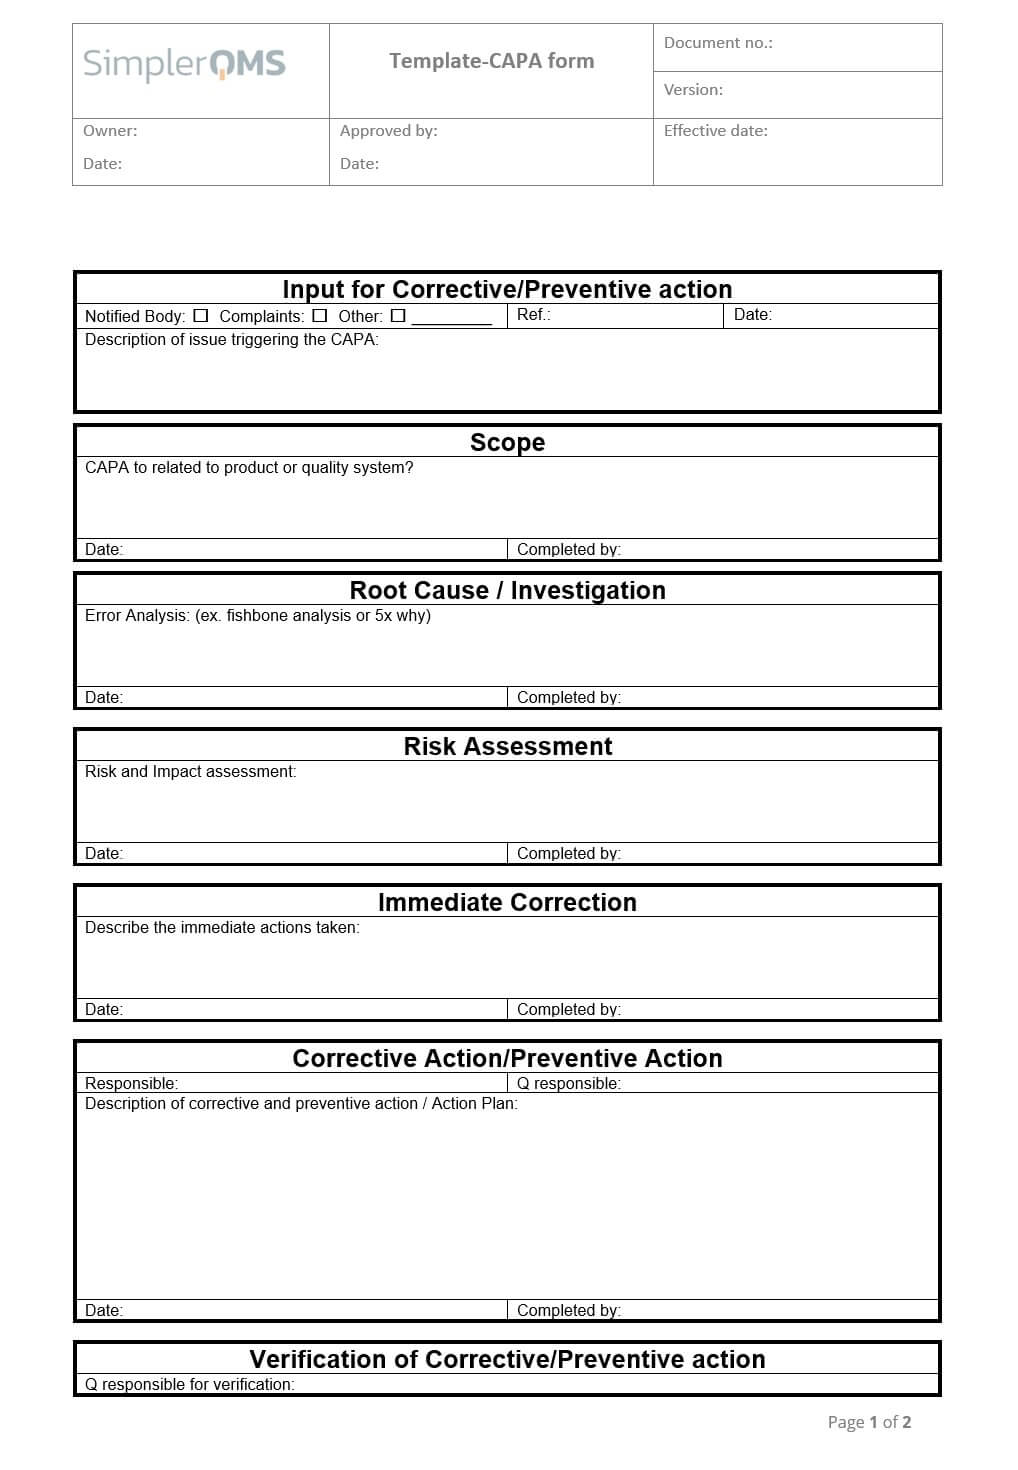 CAPA Form Template Screenshot